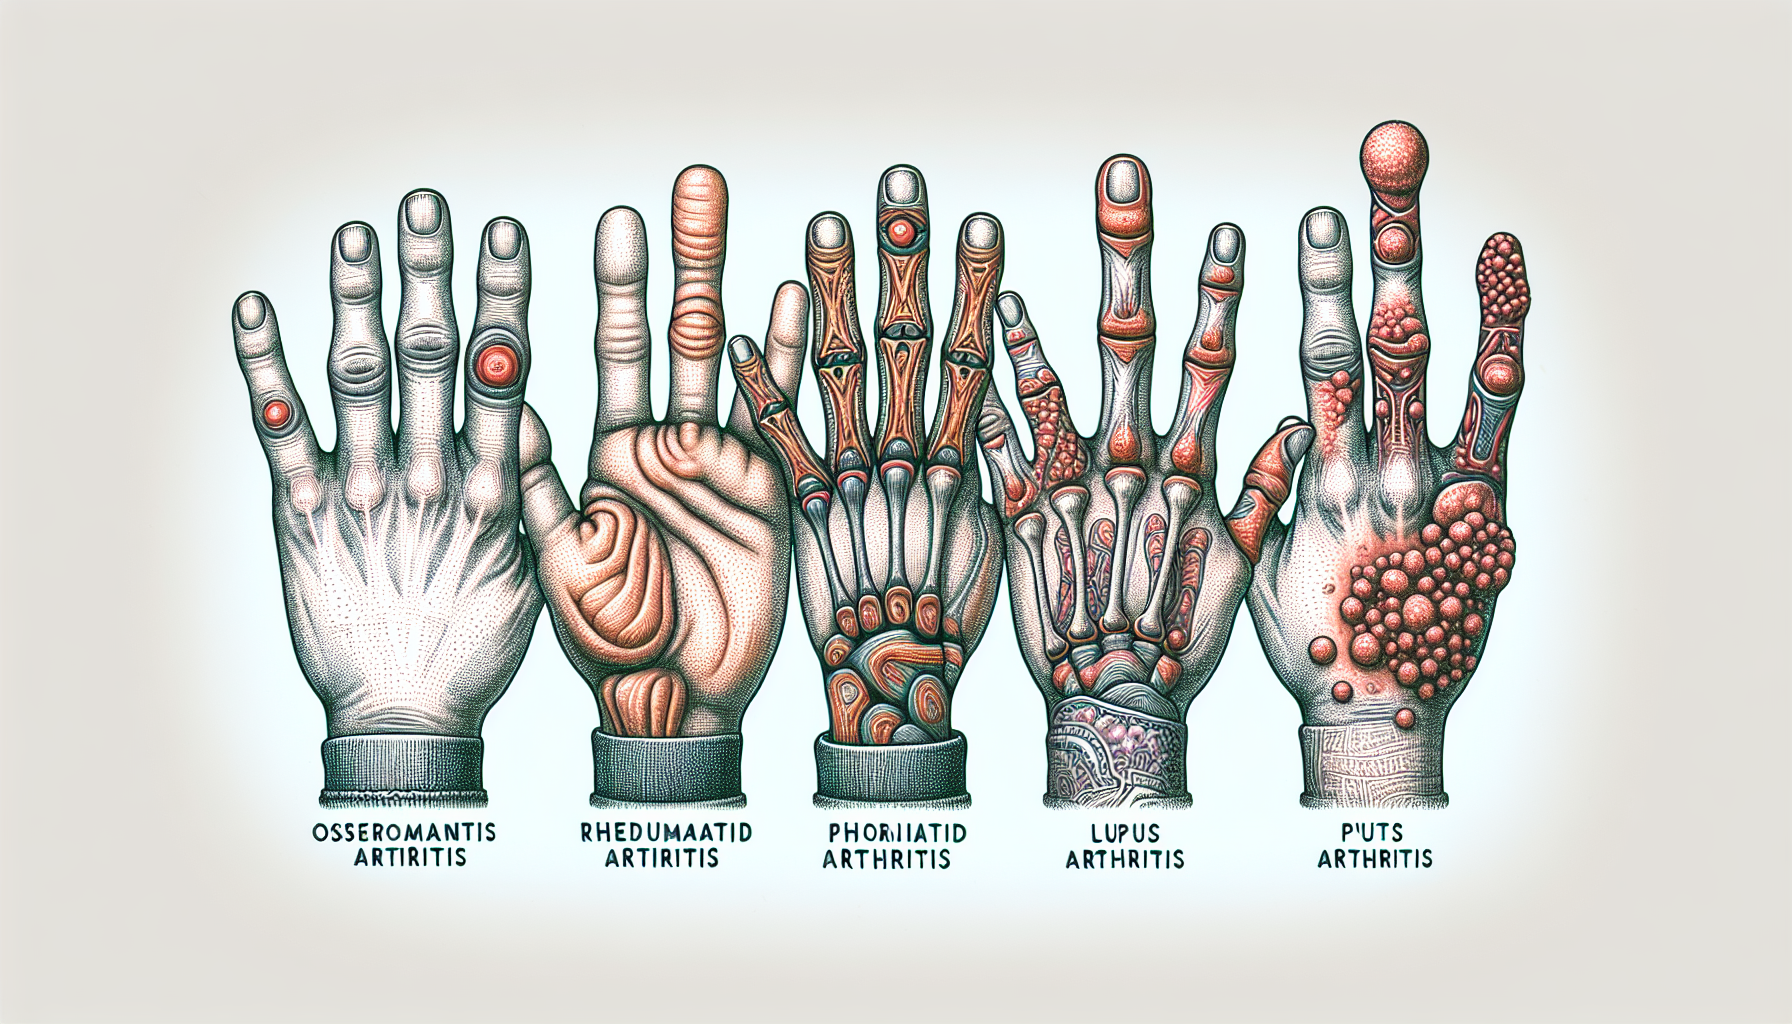 Illustration of types of arthritis affecting fingers